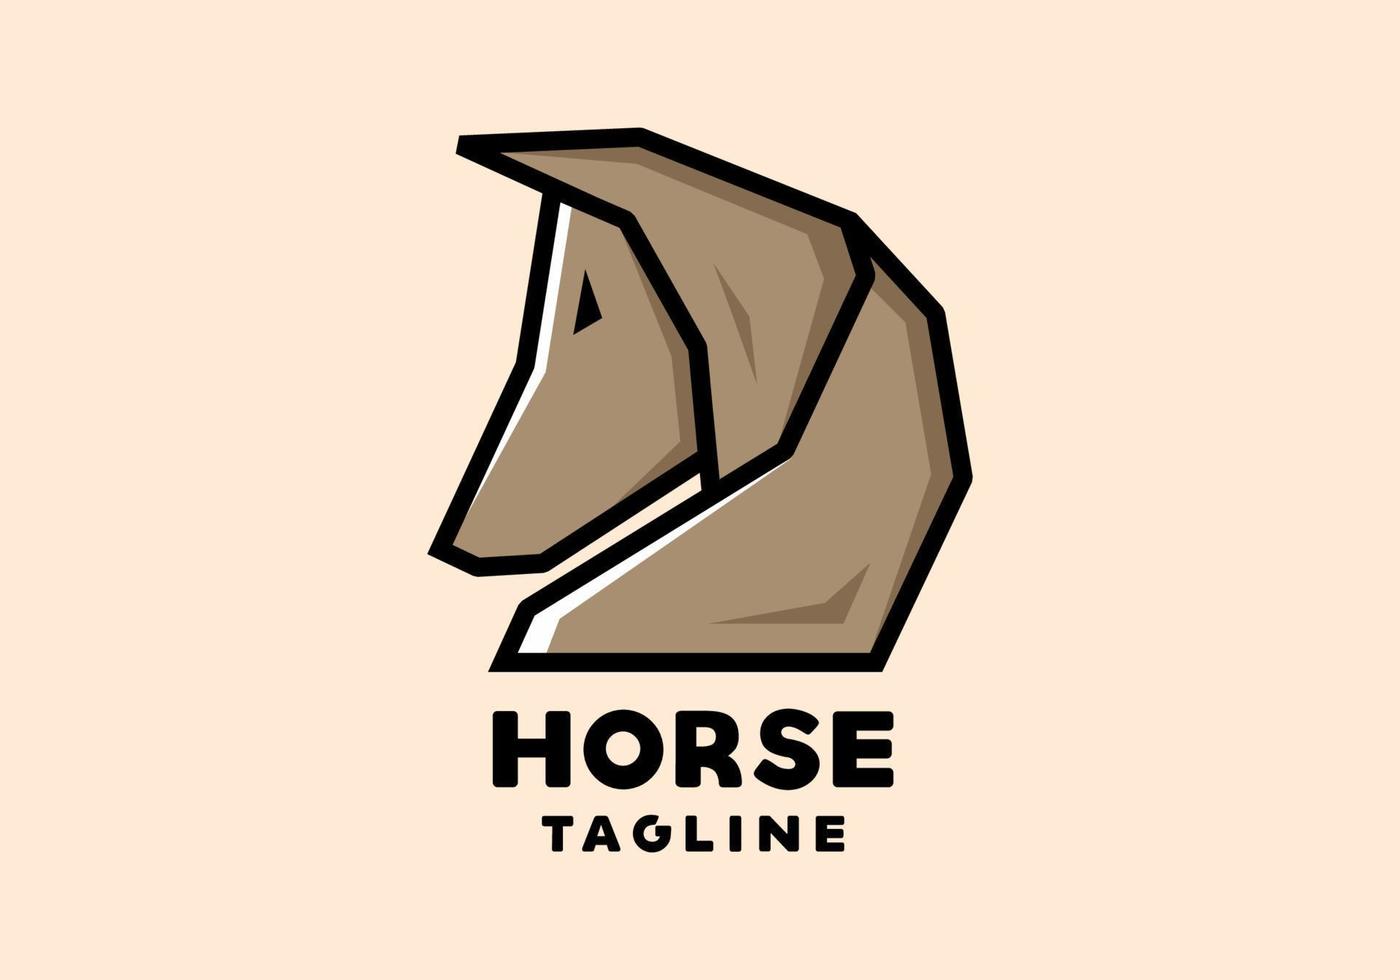 Stiff art style of horse head vector